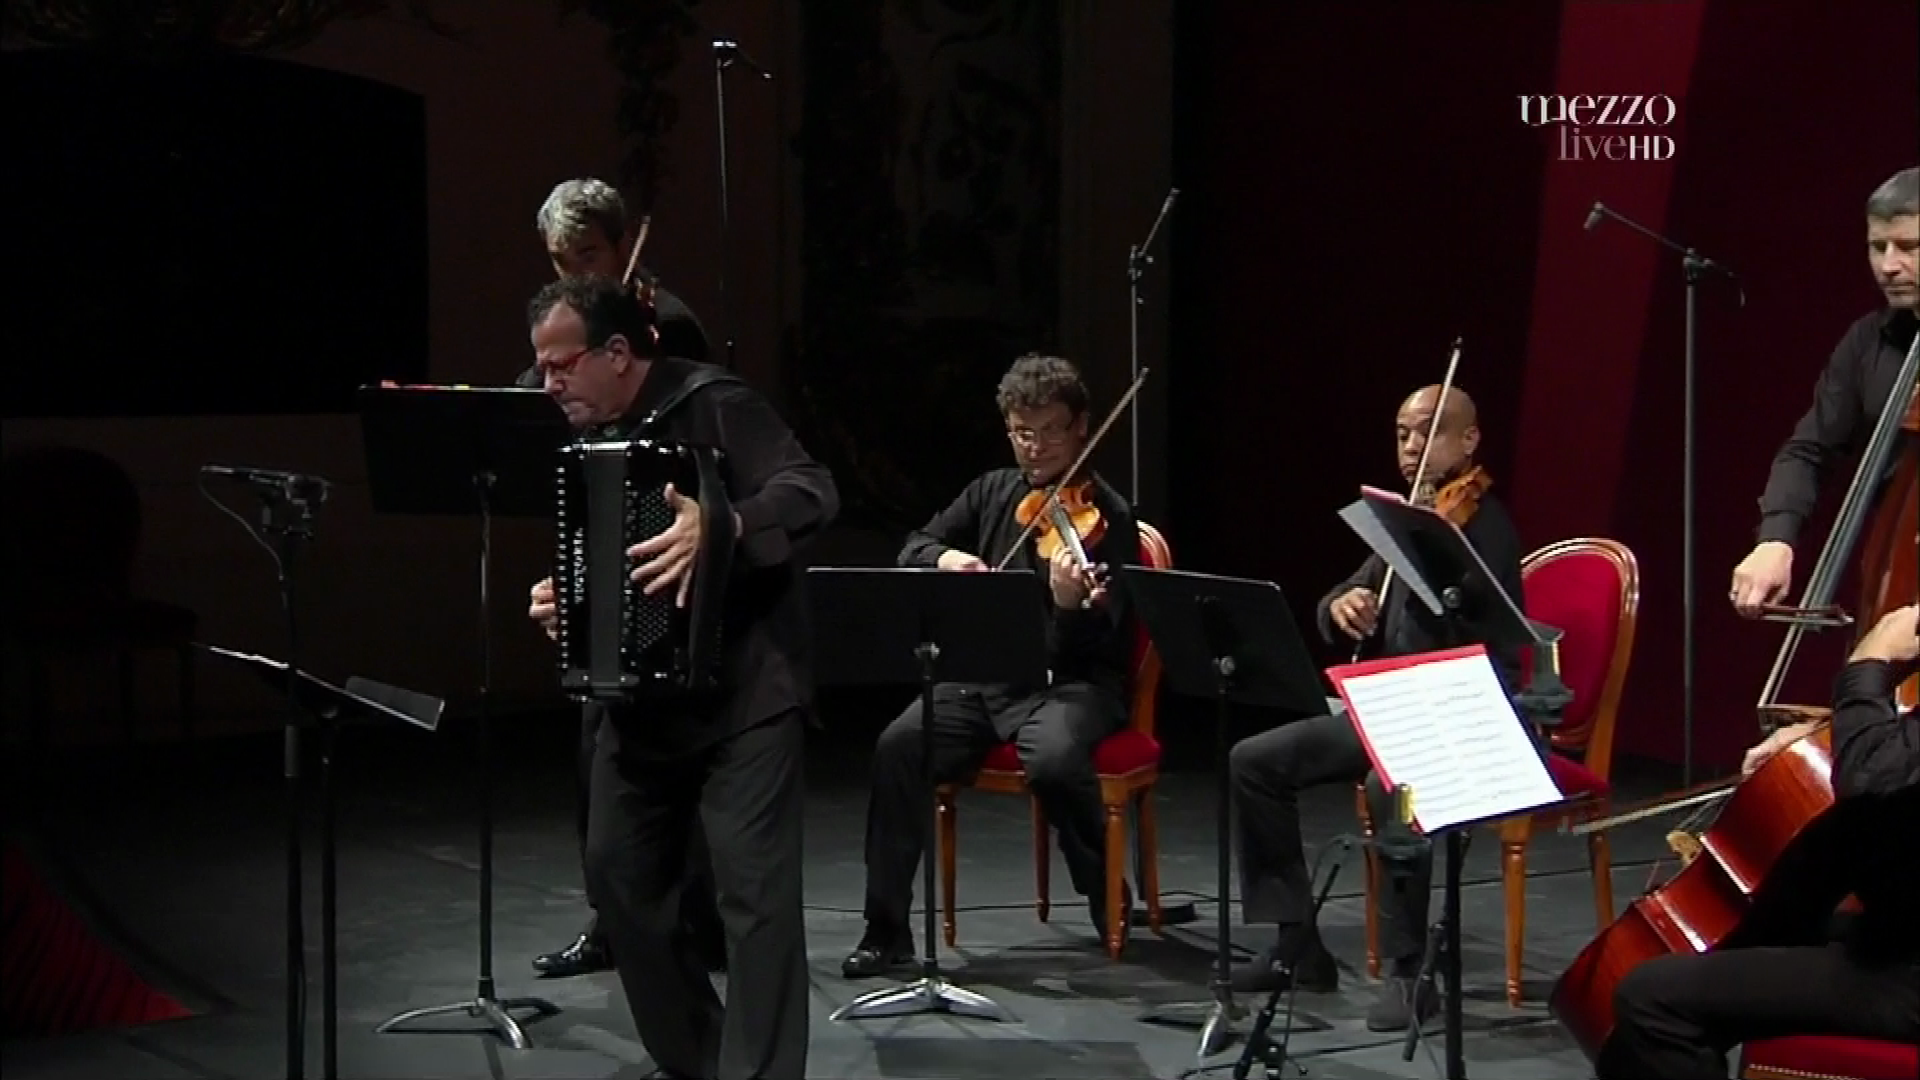 2010 Richard Galliano - Plays Bach Live at Nancy Jazz Pulsations [HDTV 1080i] 2